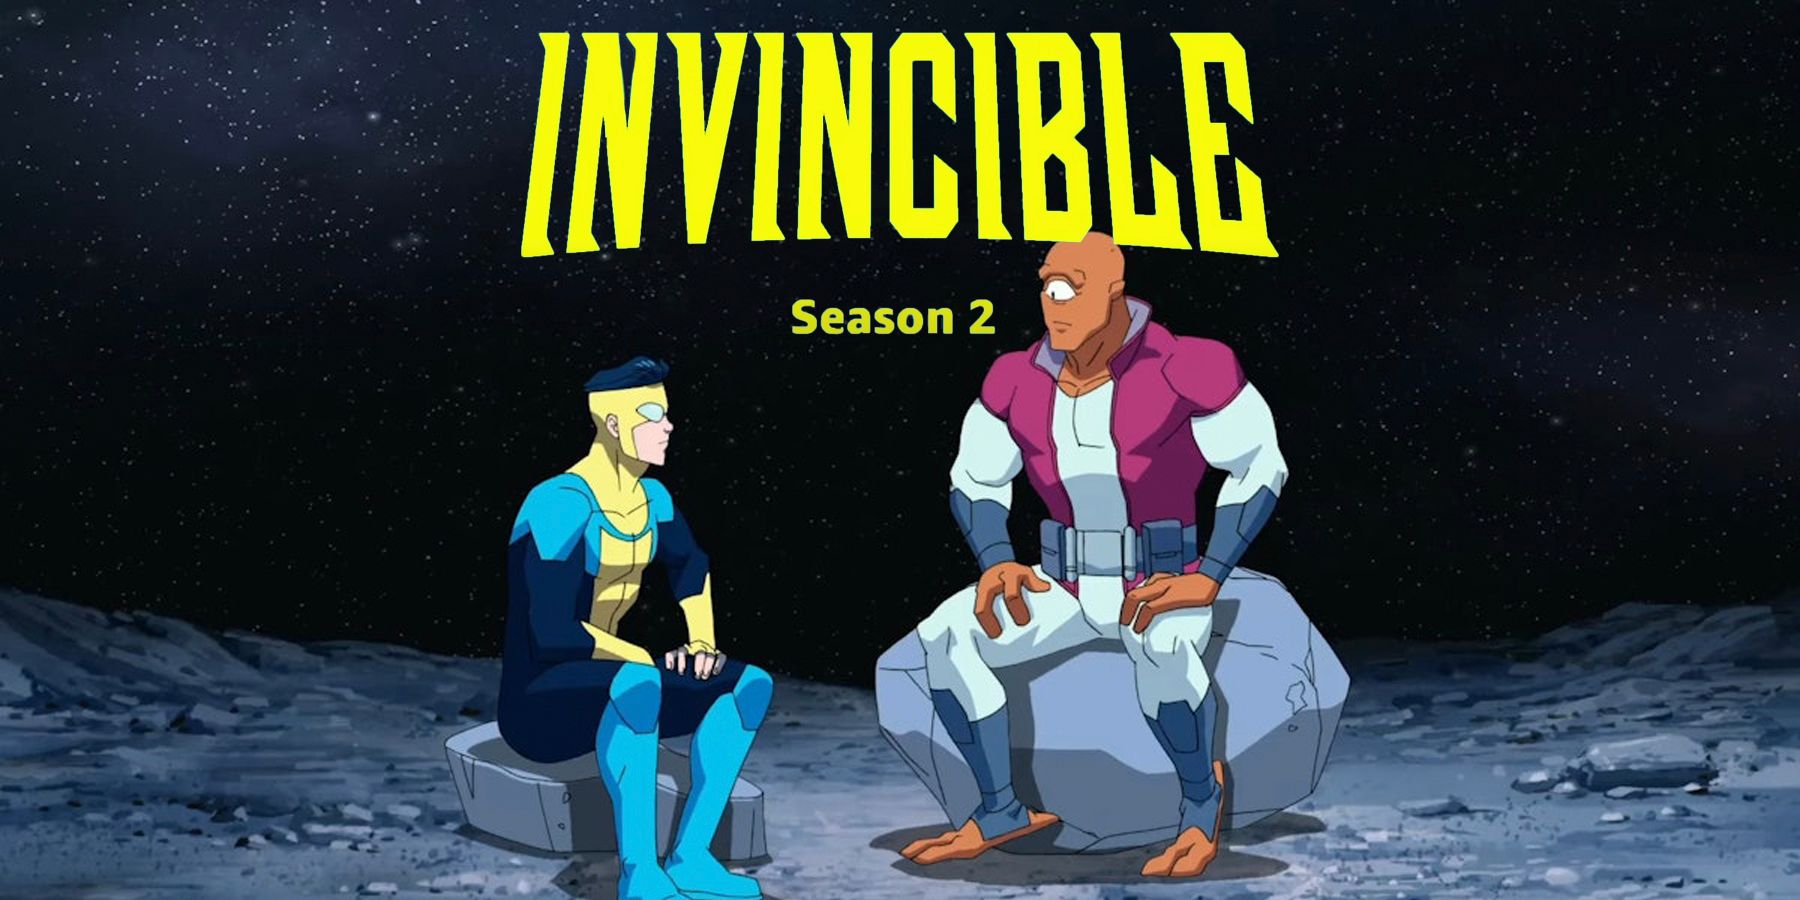 Invincible Season 2 Episode 4 Poster Released